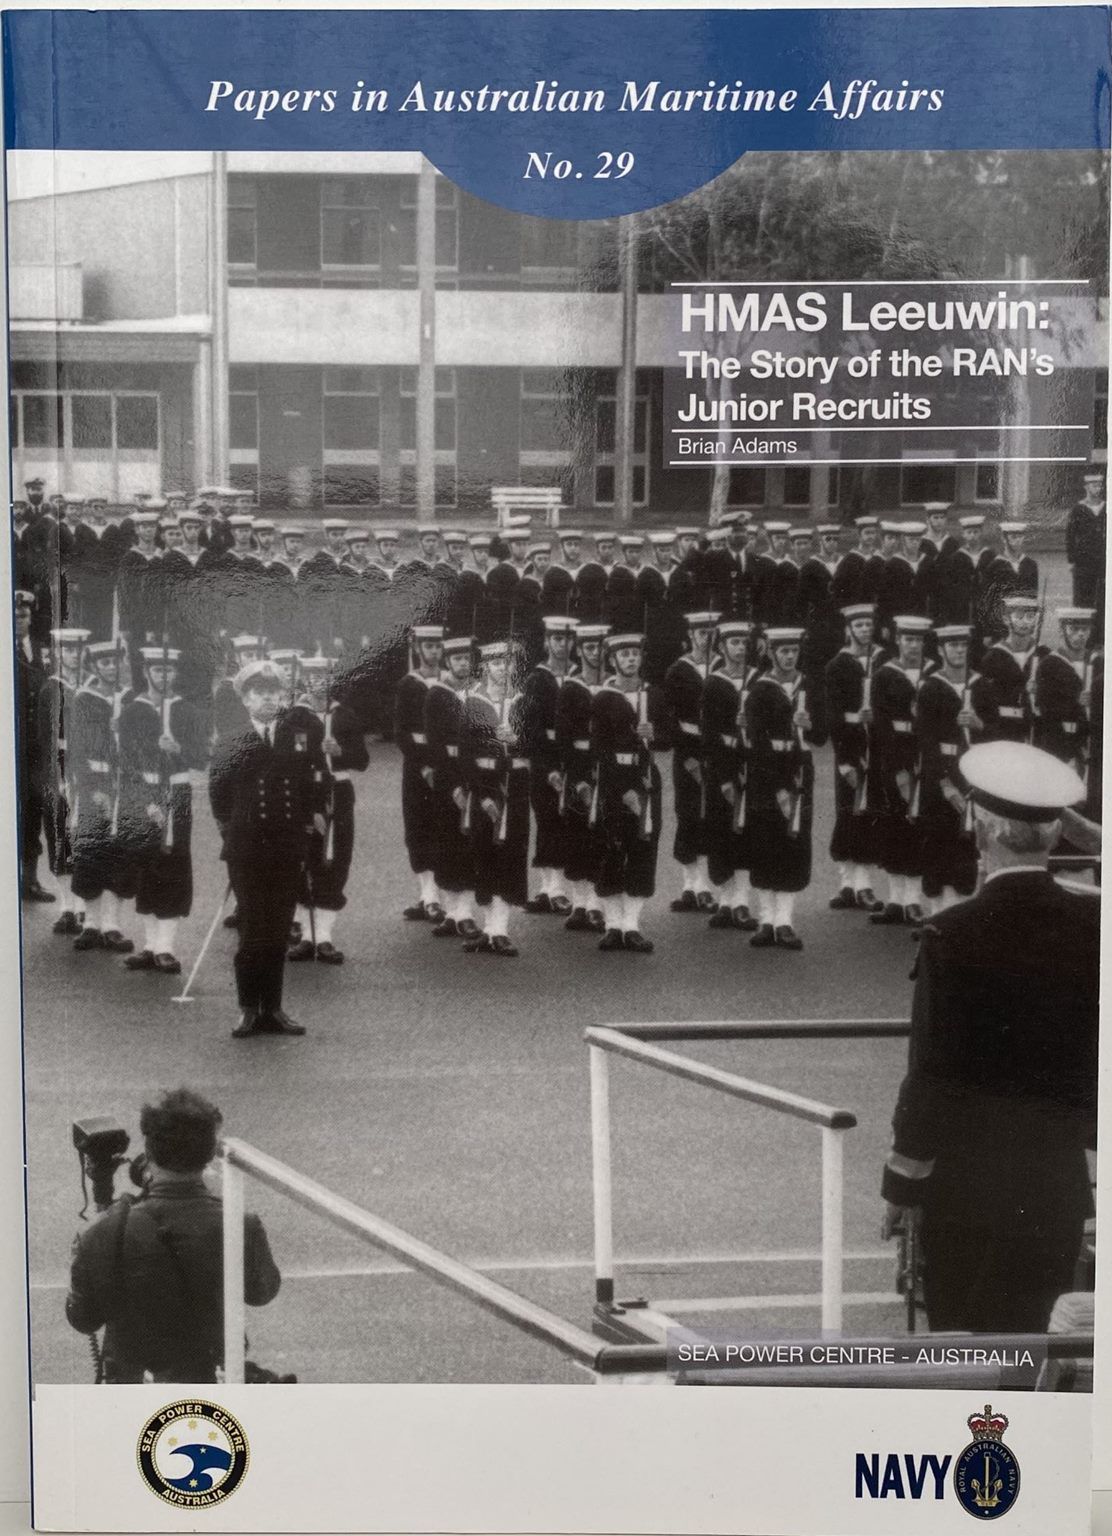 HMAS LEEUWIN: The Story of The RAN's Junior Recruits